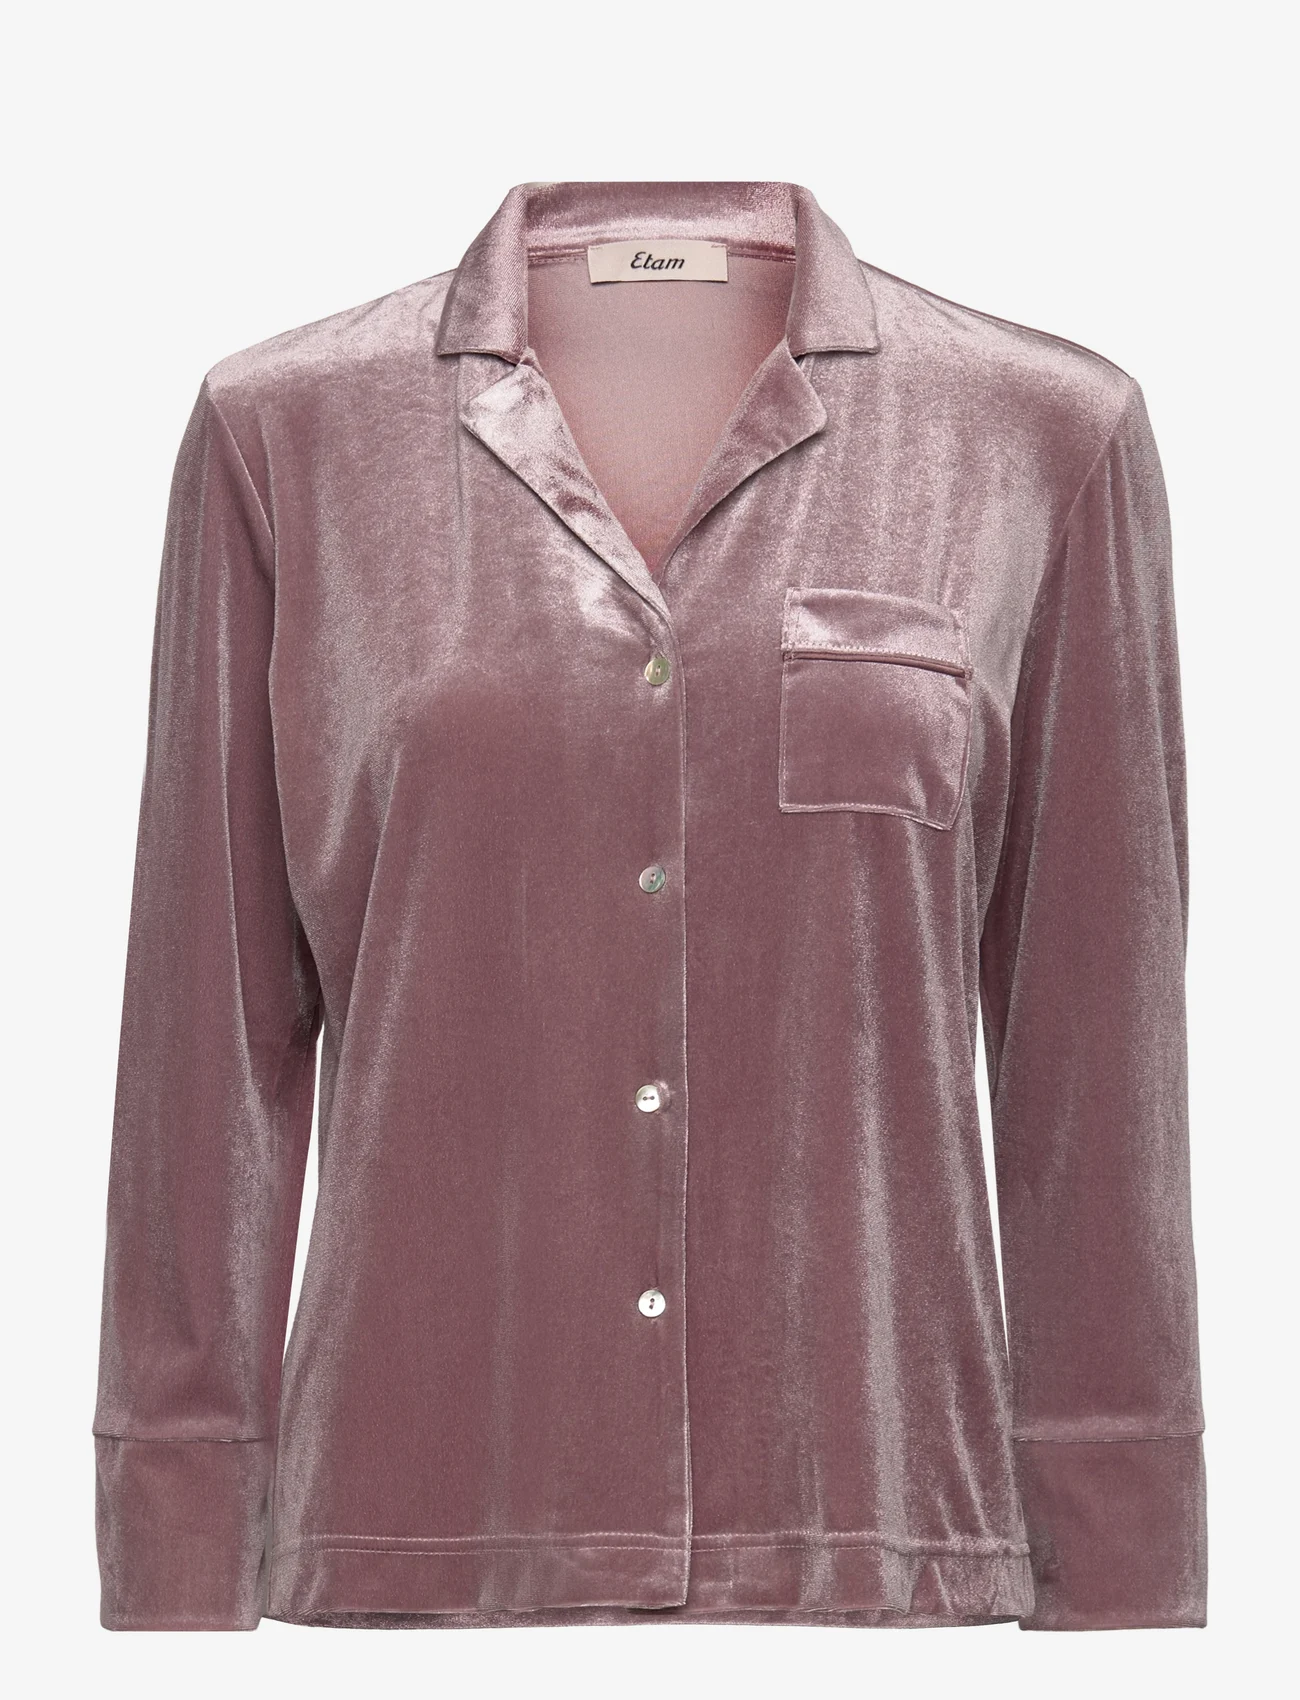 Etam - Belle - Shirt pyjama - náttföt - purple - 1